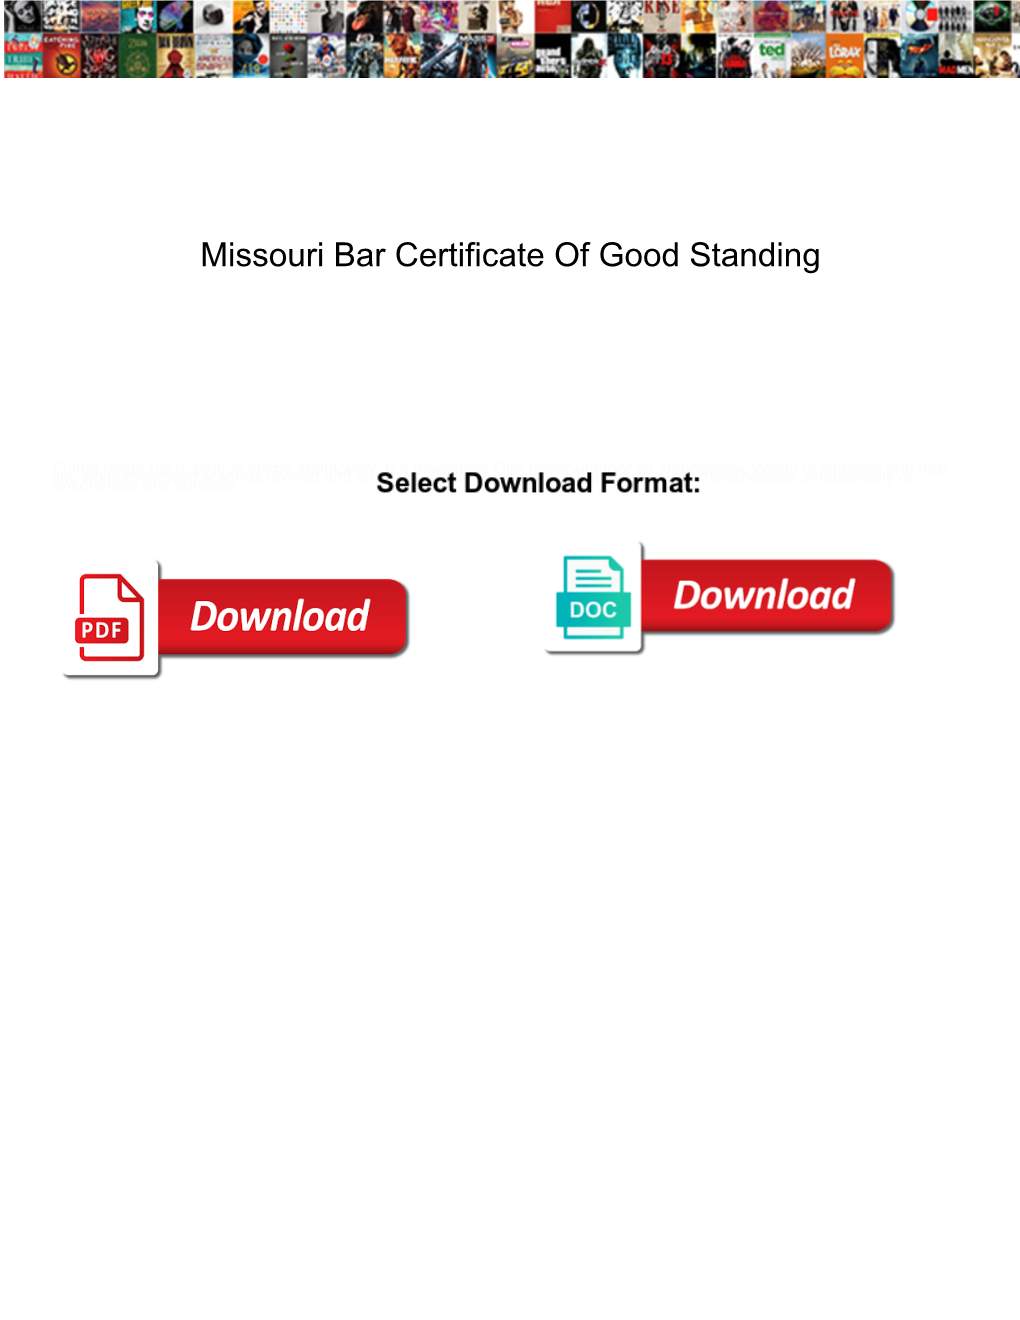 Missouri Bar Certificate of Good Standing